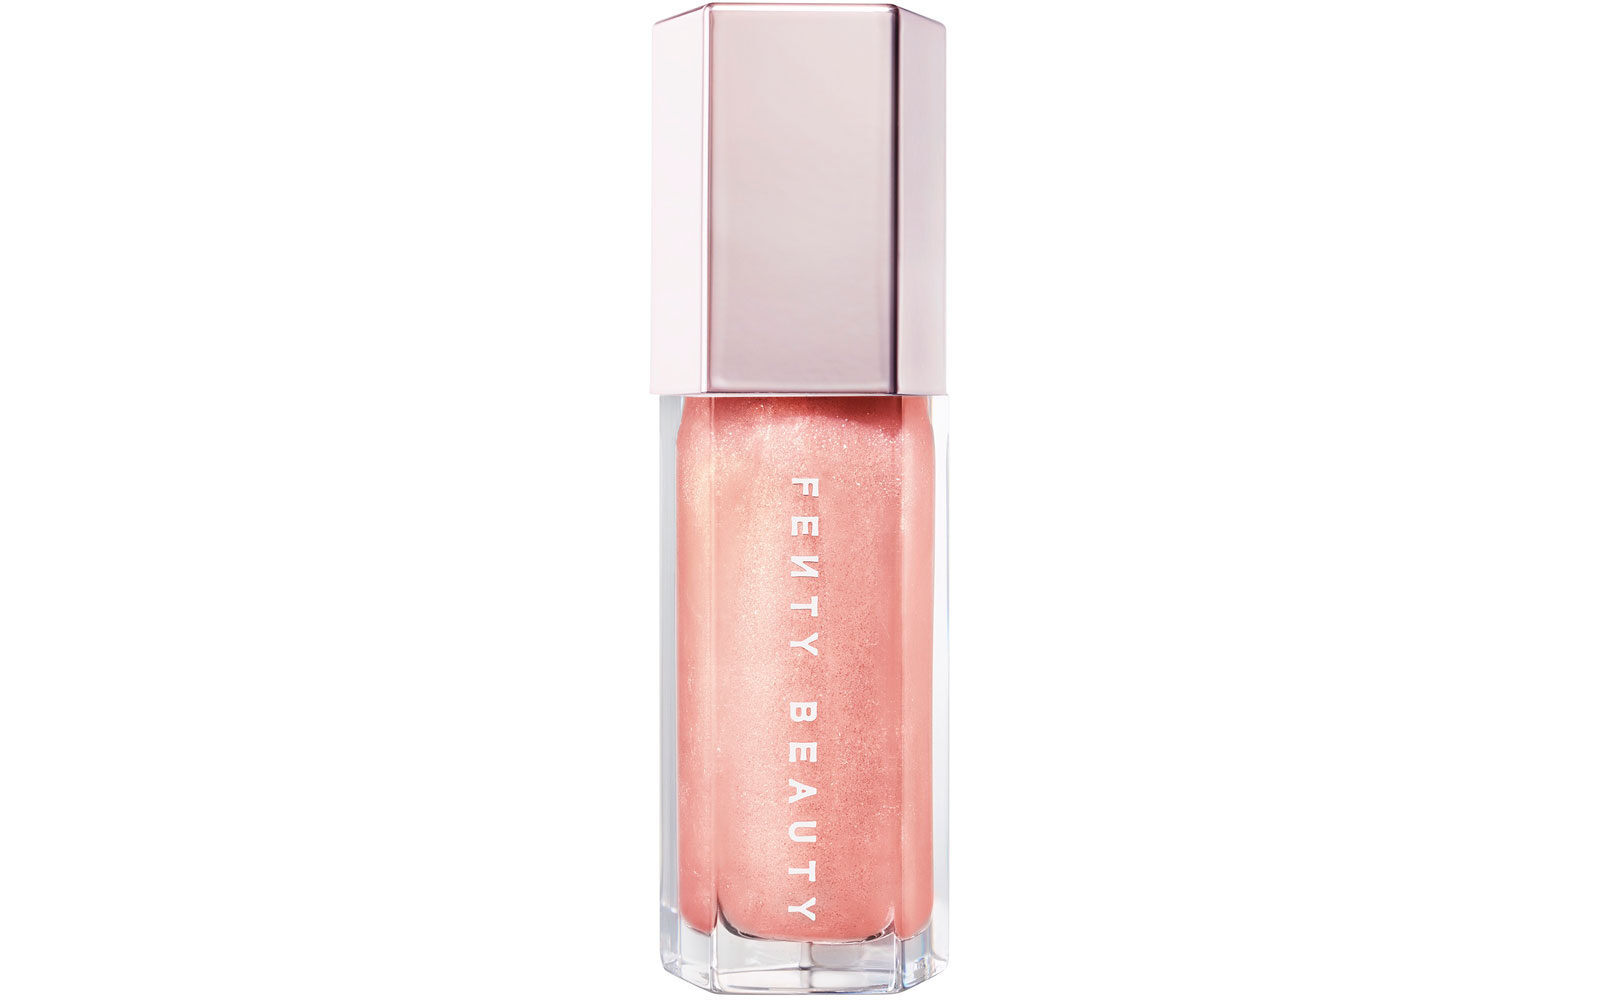 Fenty Beauty Gloss Bomb Universal Lip Luminizer (Sephora, 18,90 euro) regala una luminosità esplosiva alle labbra.